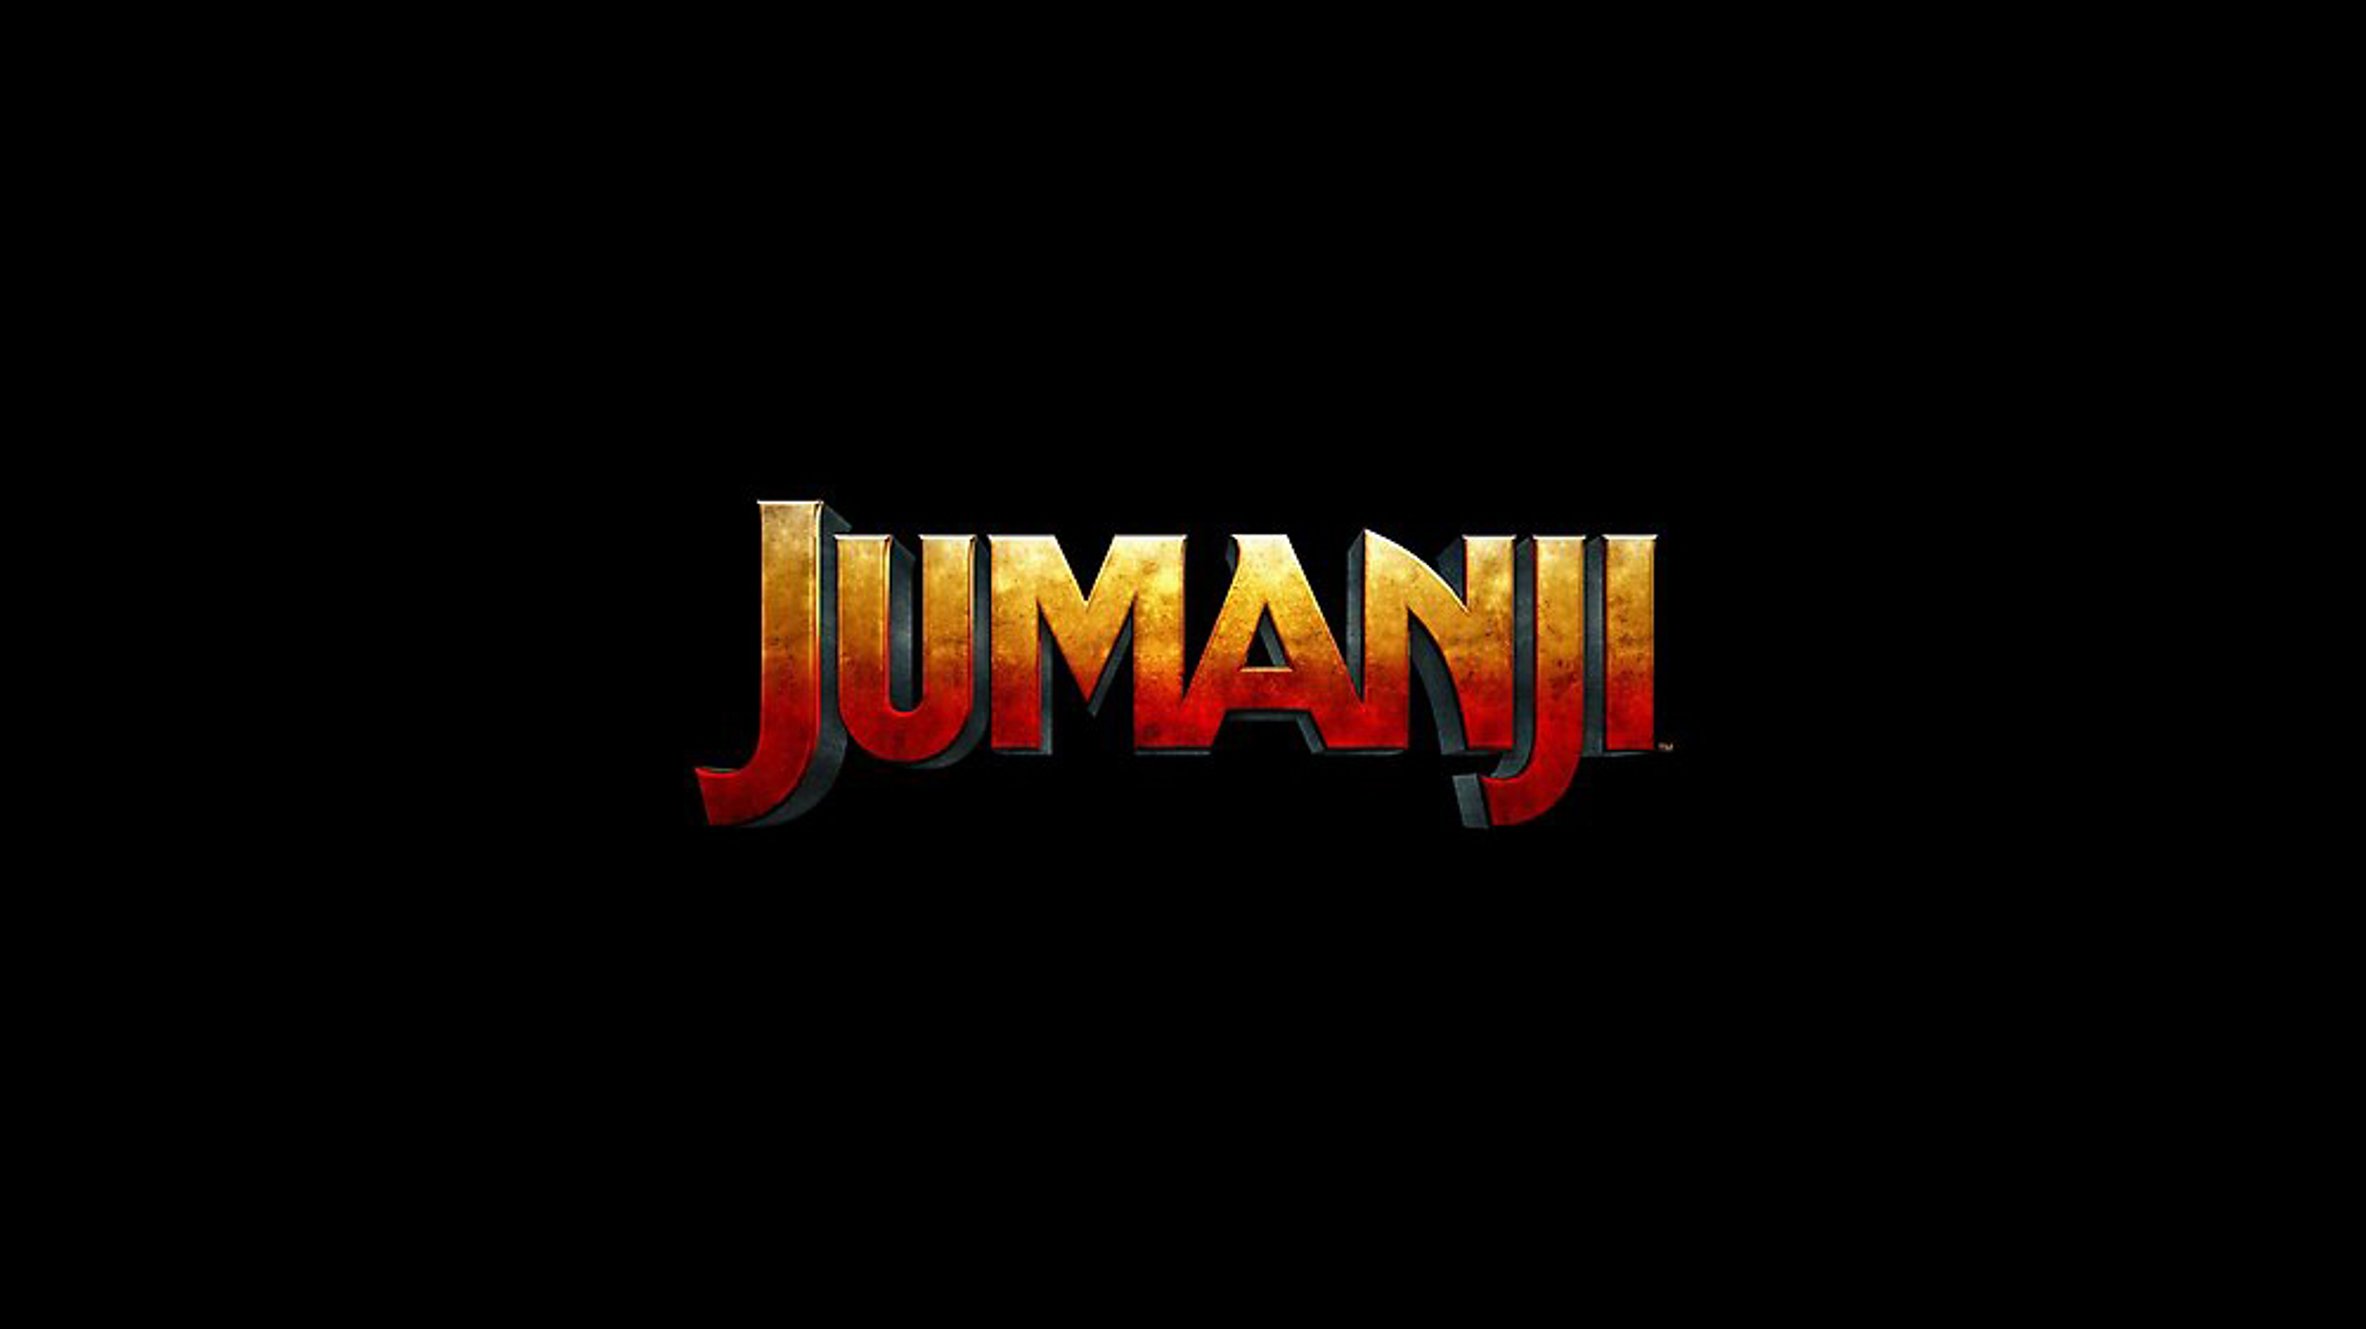 Jumanji Sequel Casting More Roles!